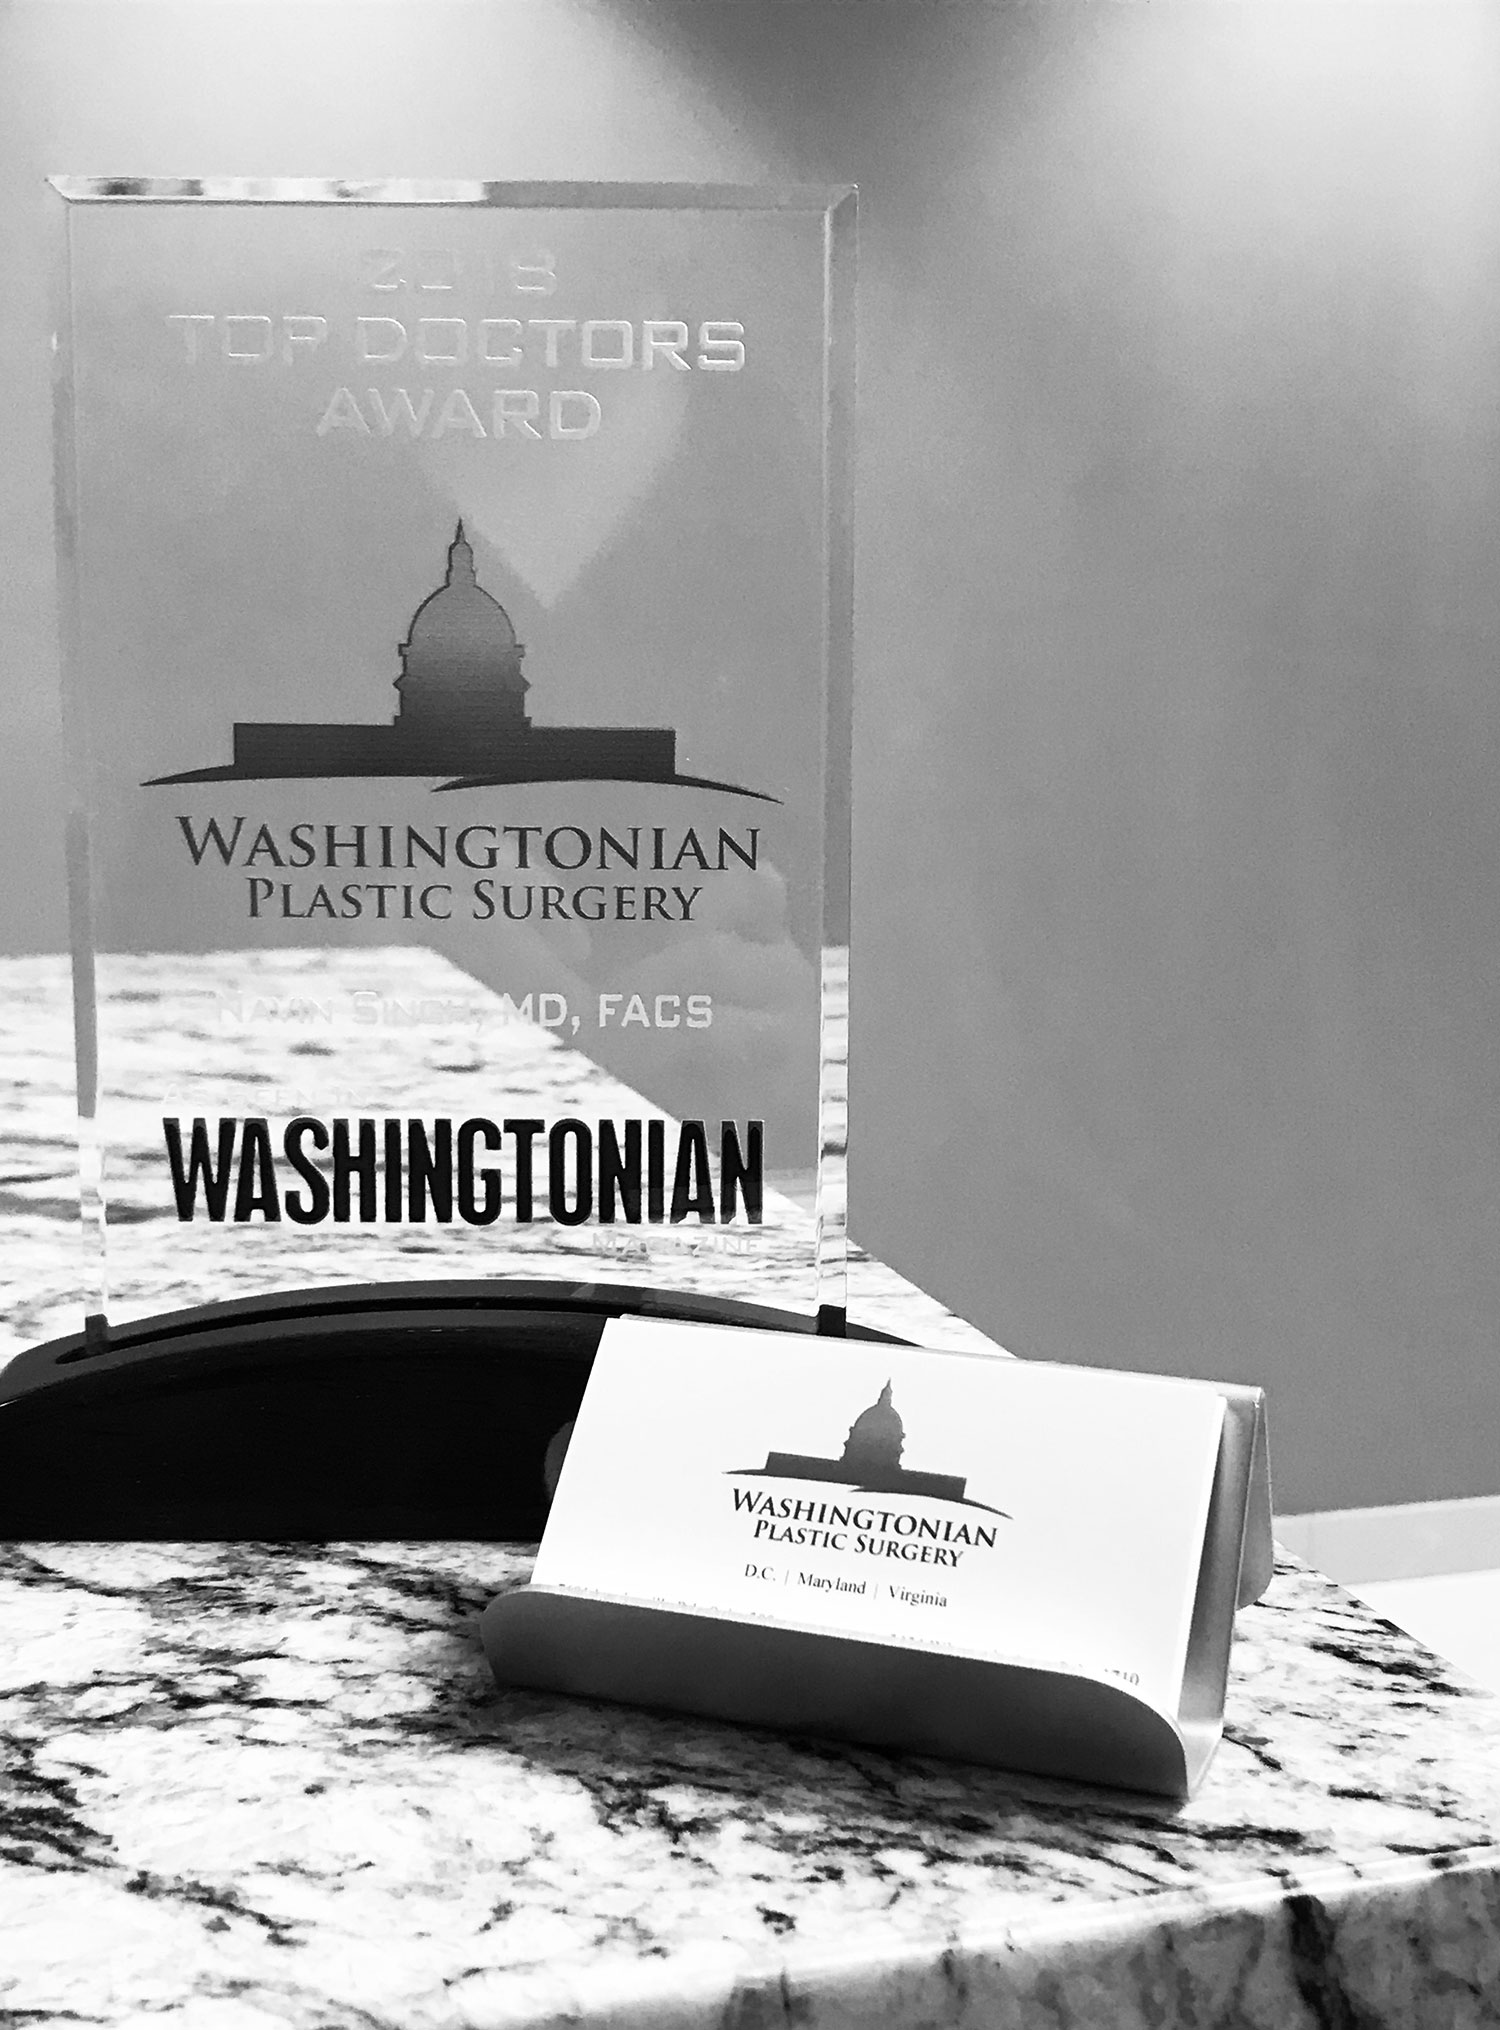 Washingtonian Plastic Surgery office awards